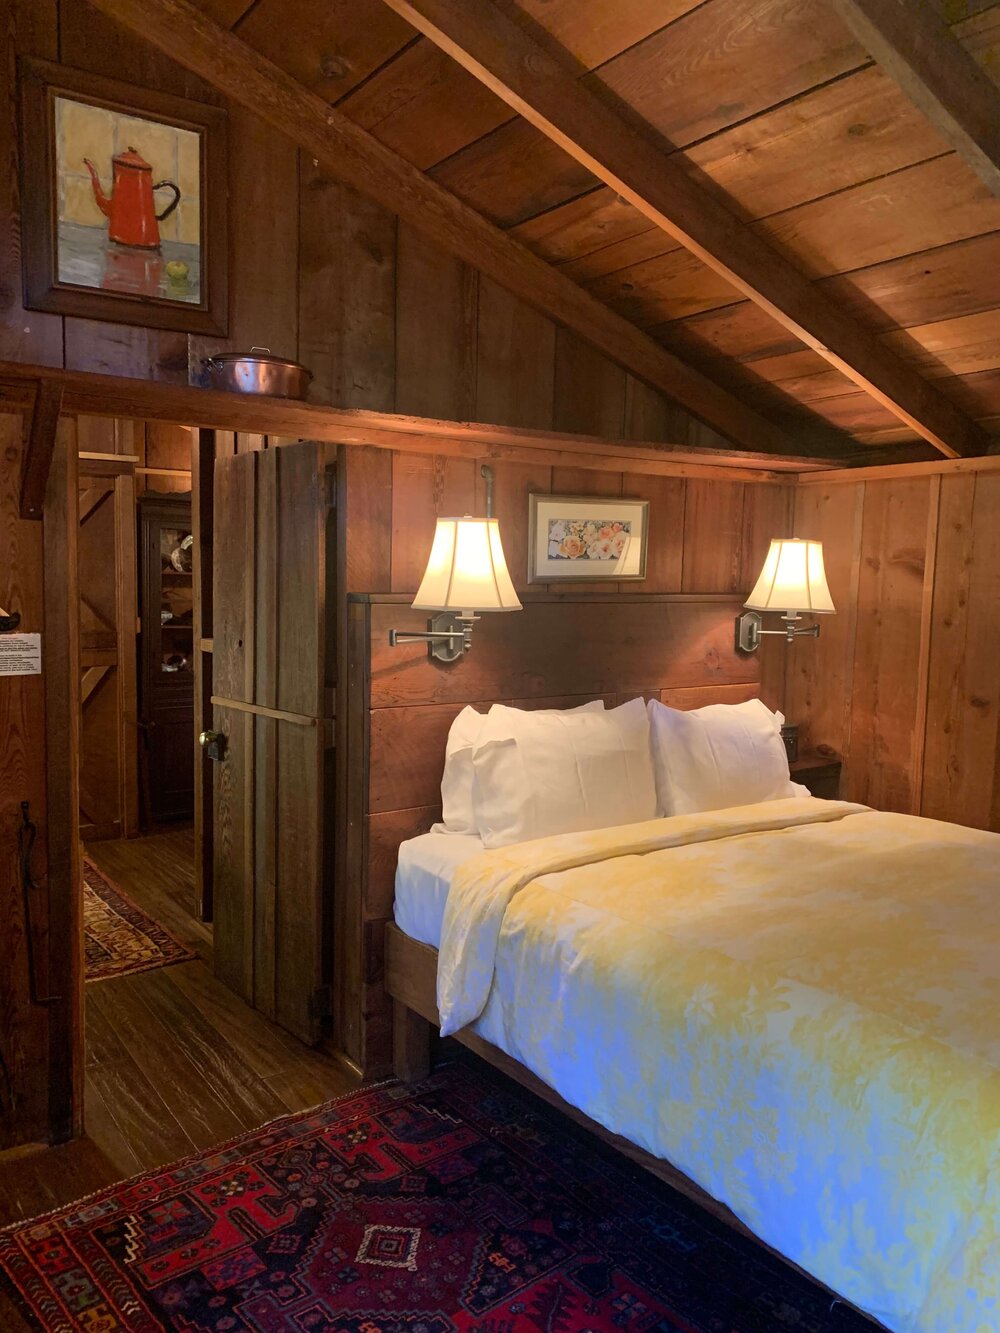 Deetjens-hotel-room-wooden-cabin-bed-with-lamps